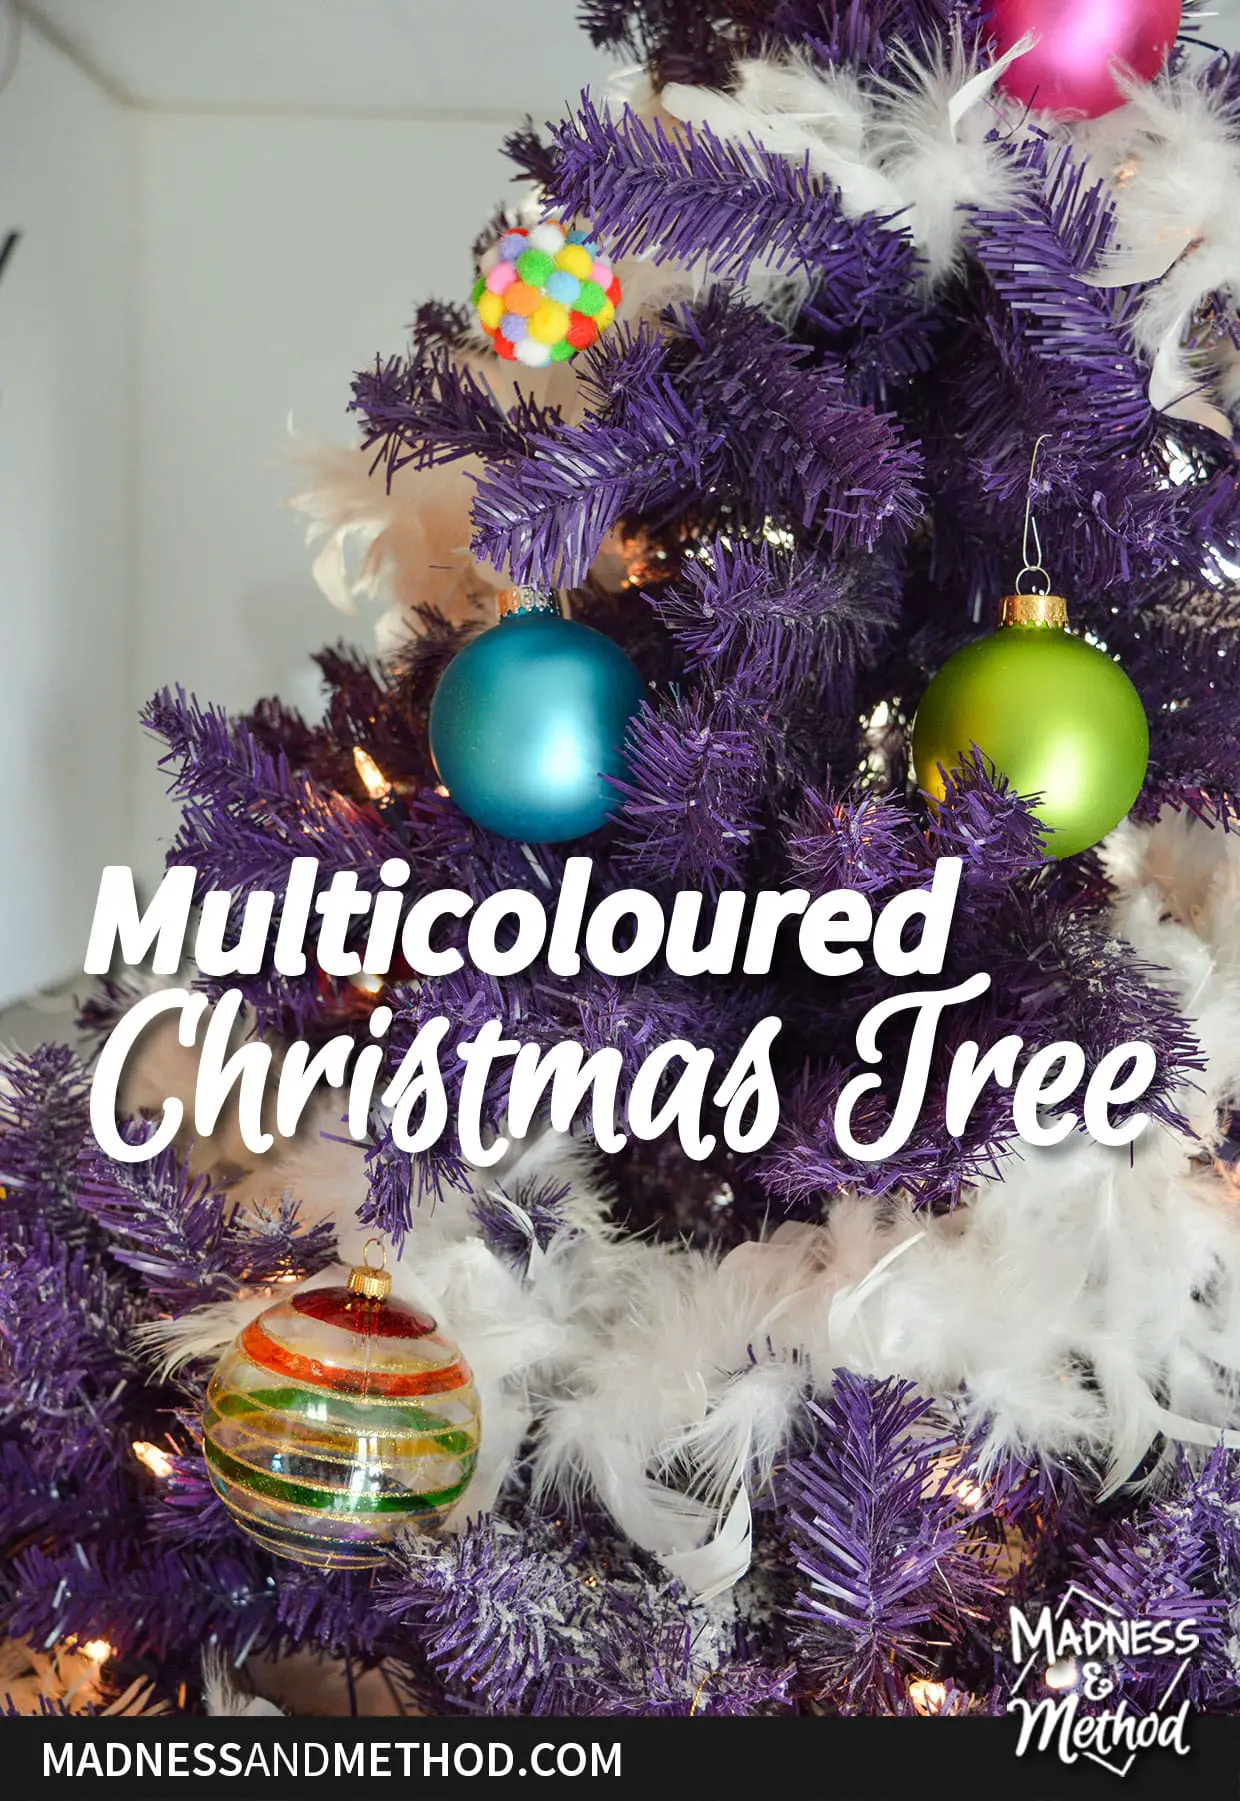 multicoloured christmas ornaments